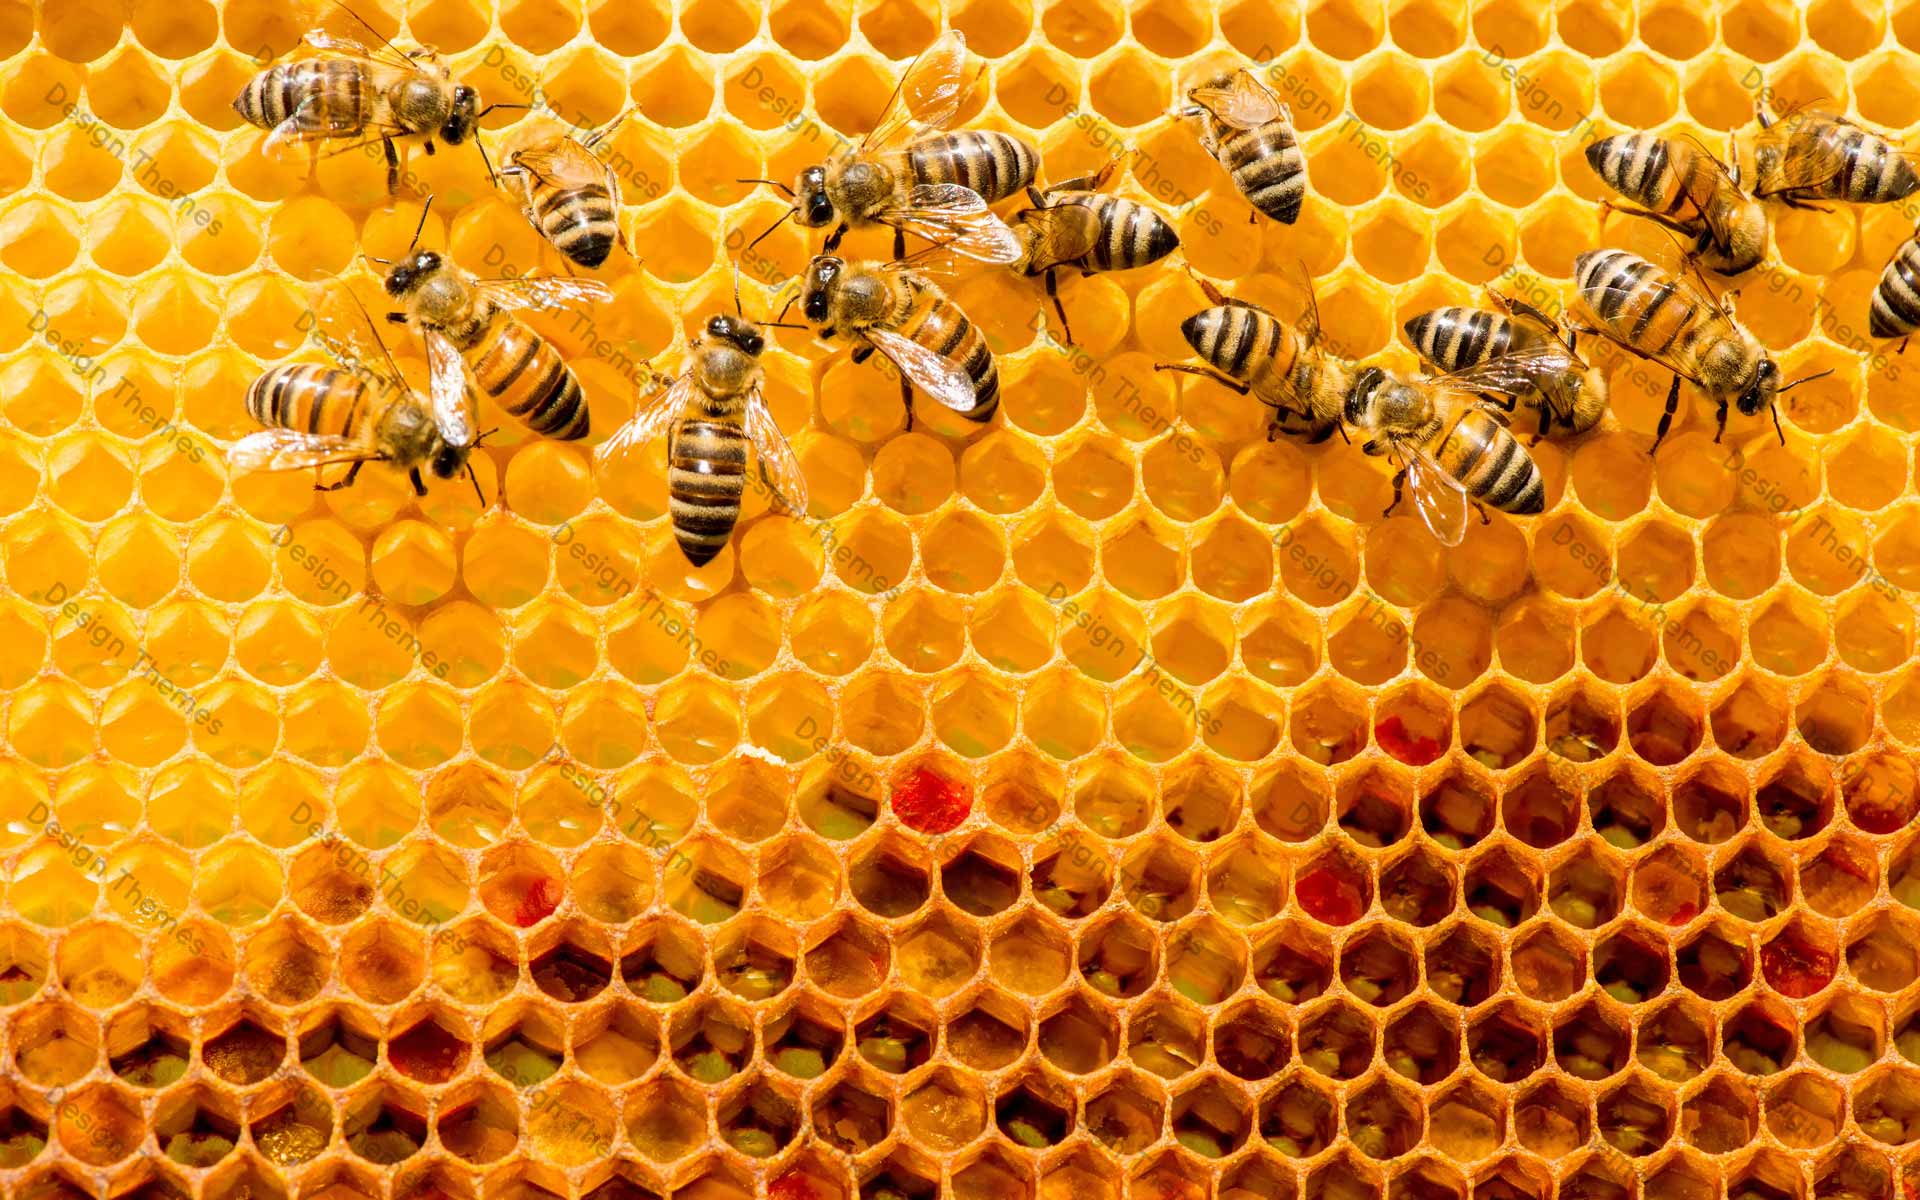 The honeybee on work